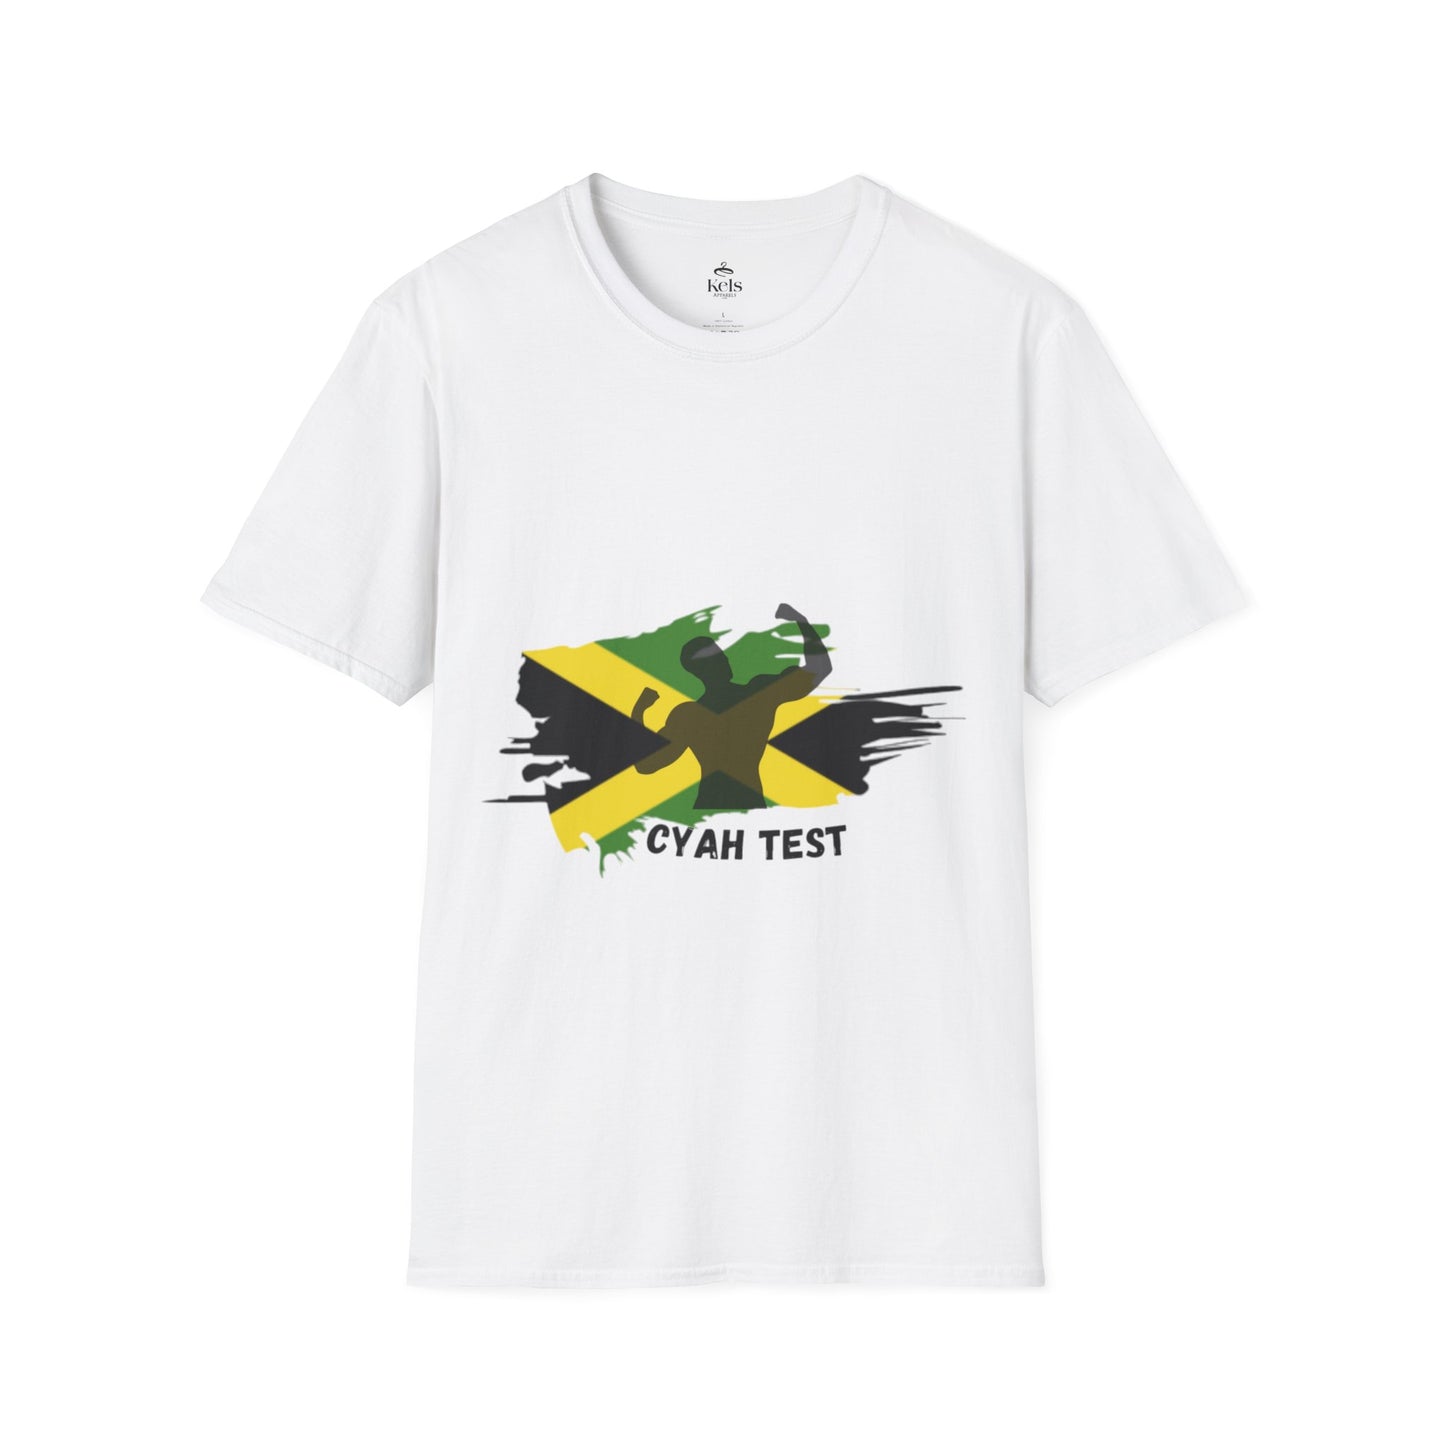 CYA TEST J.A. T-Shirt